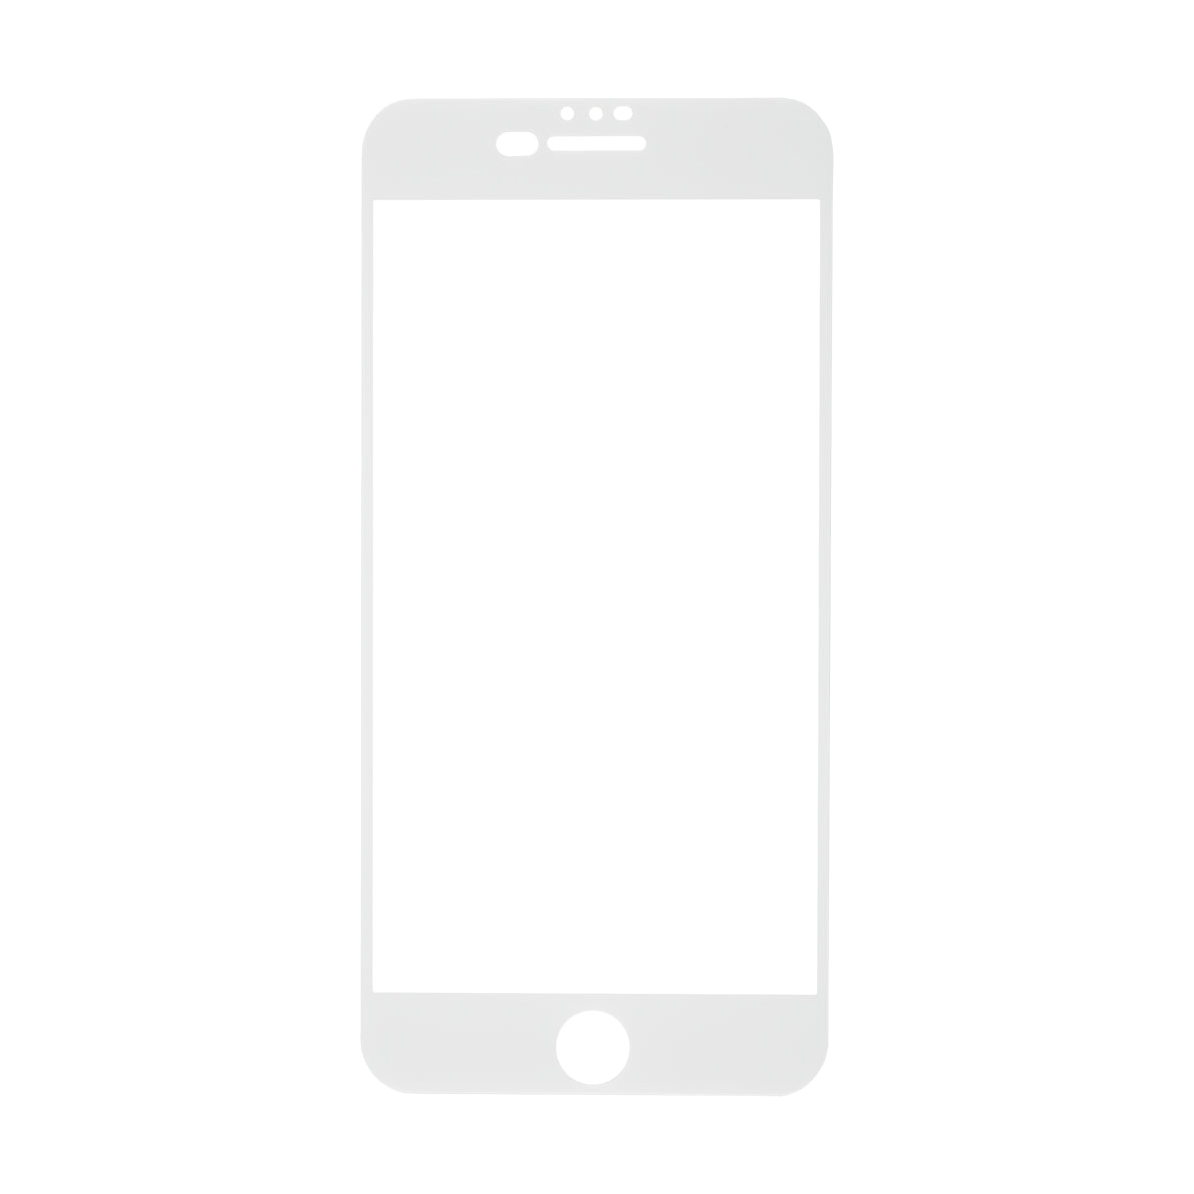 Защитное стекло Red Line Corning Full Screen для iPhone 6 Plus/7 Plus/8 Plus, белое, цвет белый iPhone 6 Plus, iPhone 7 Plus, iPhone 8 Plus - фото 1